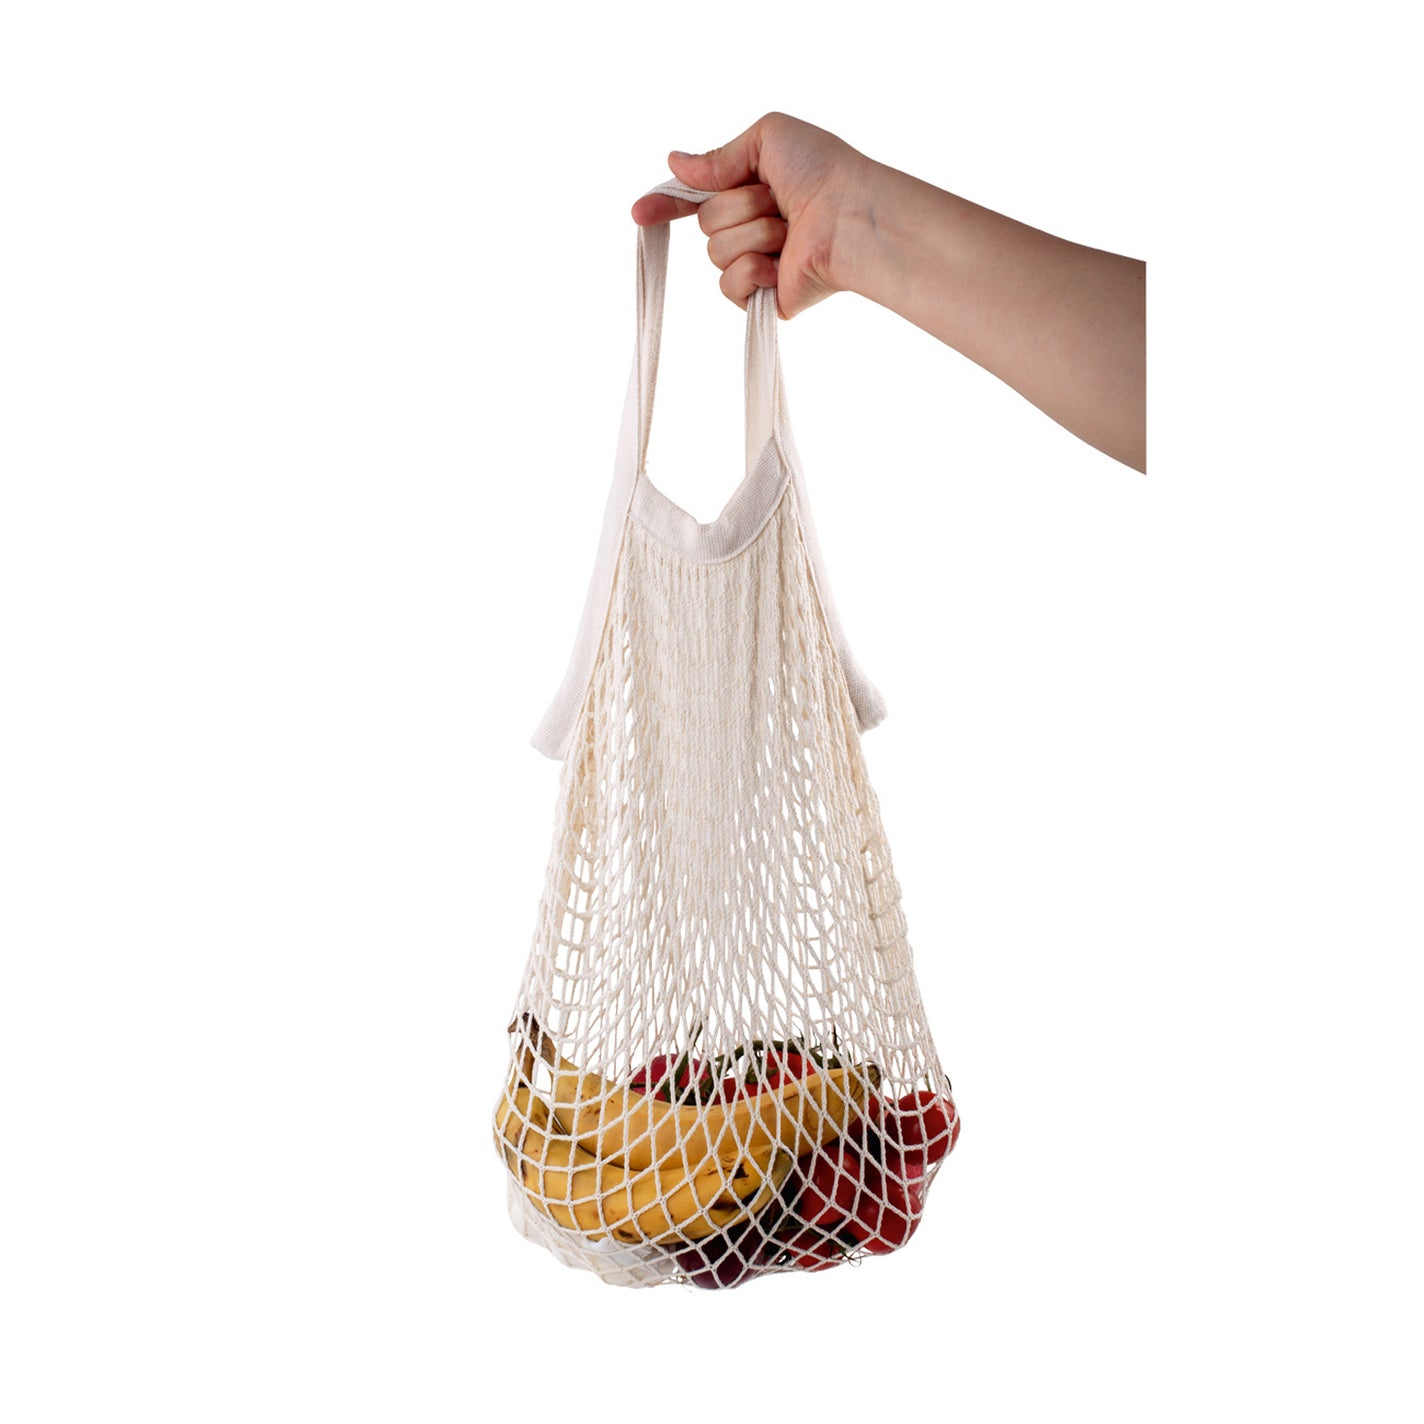 Redecker Natural Weave Shopping Bag